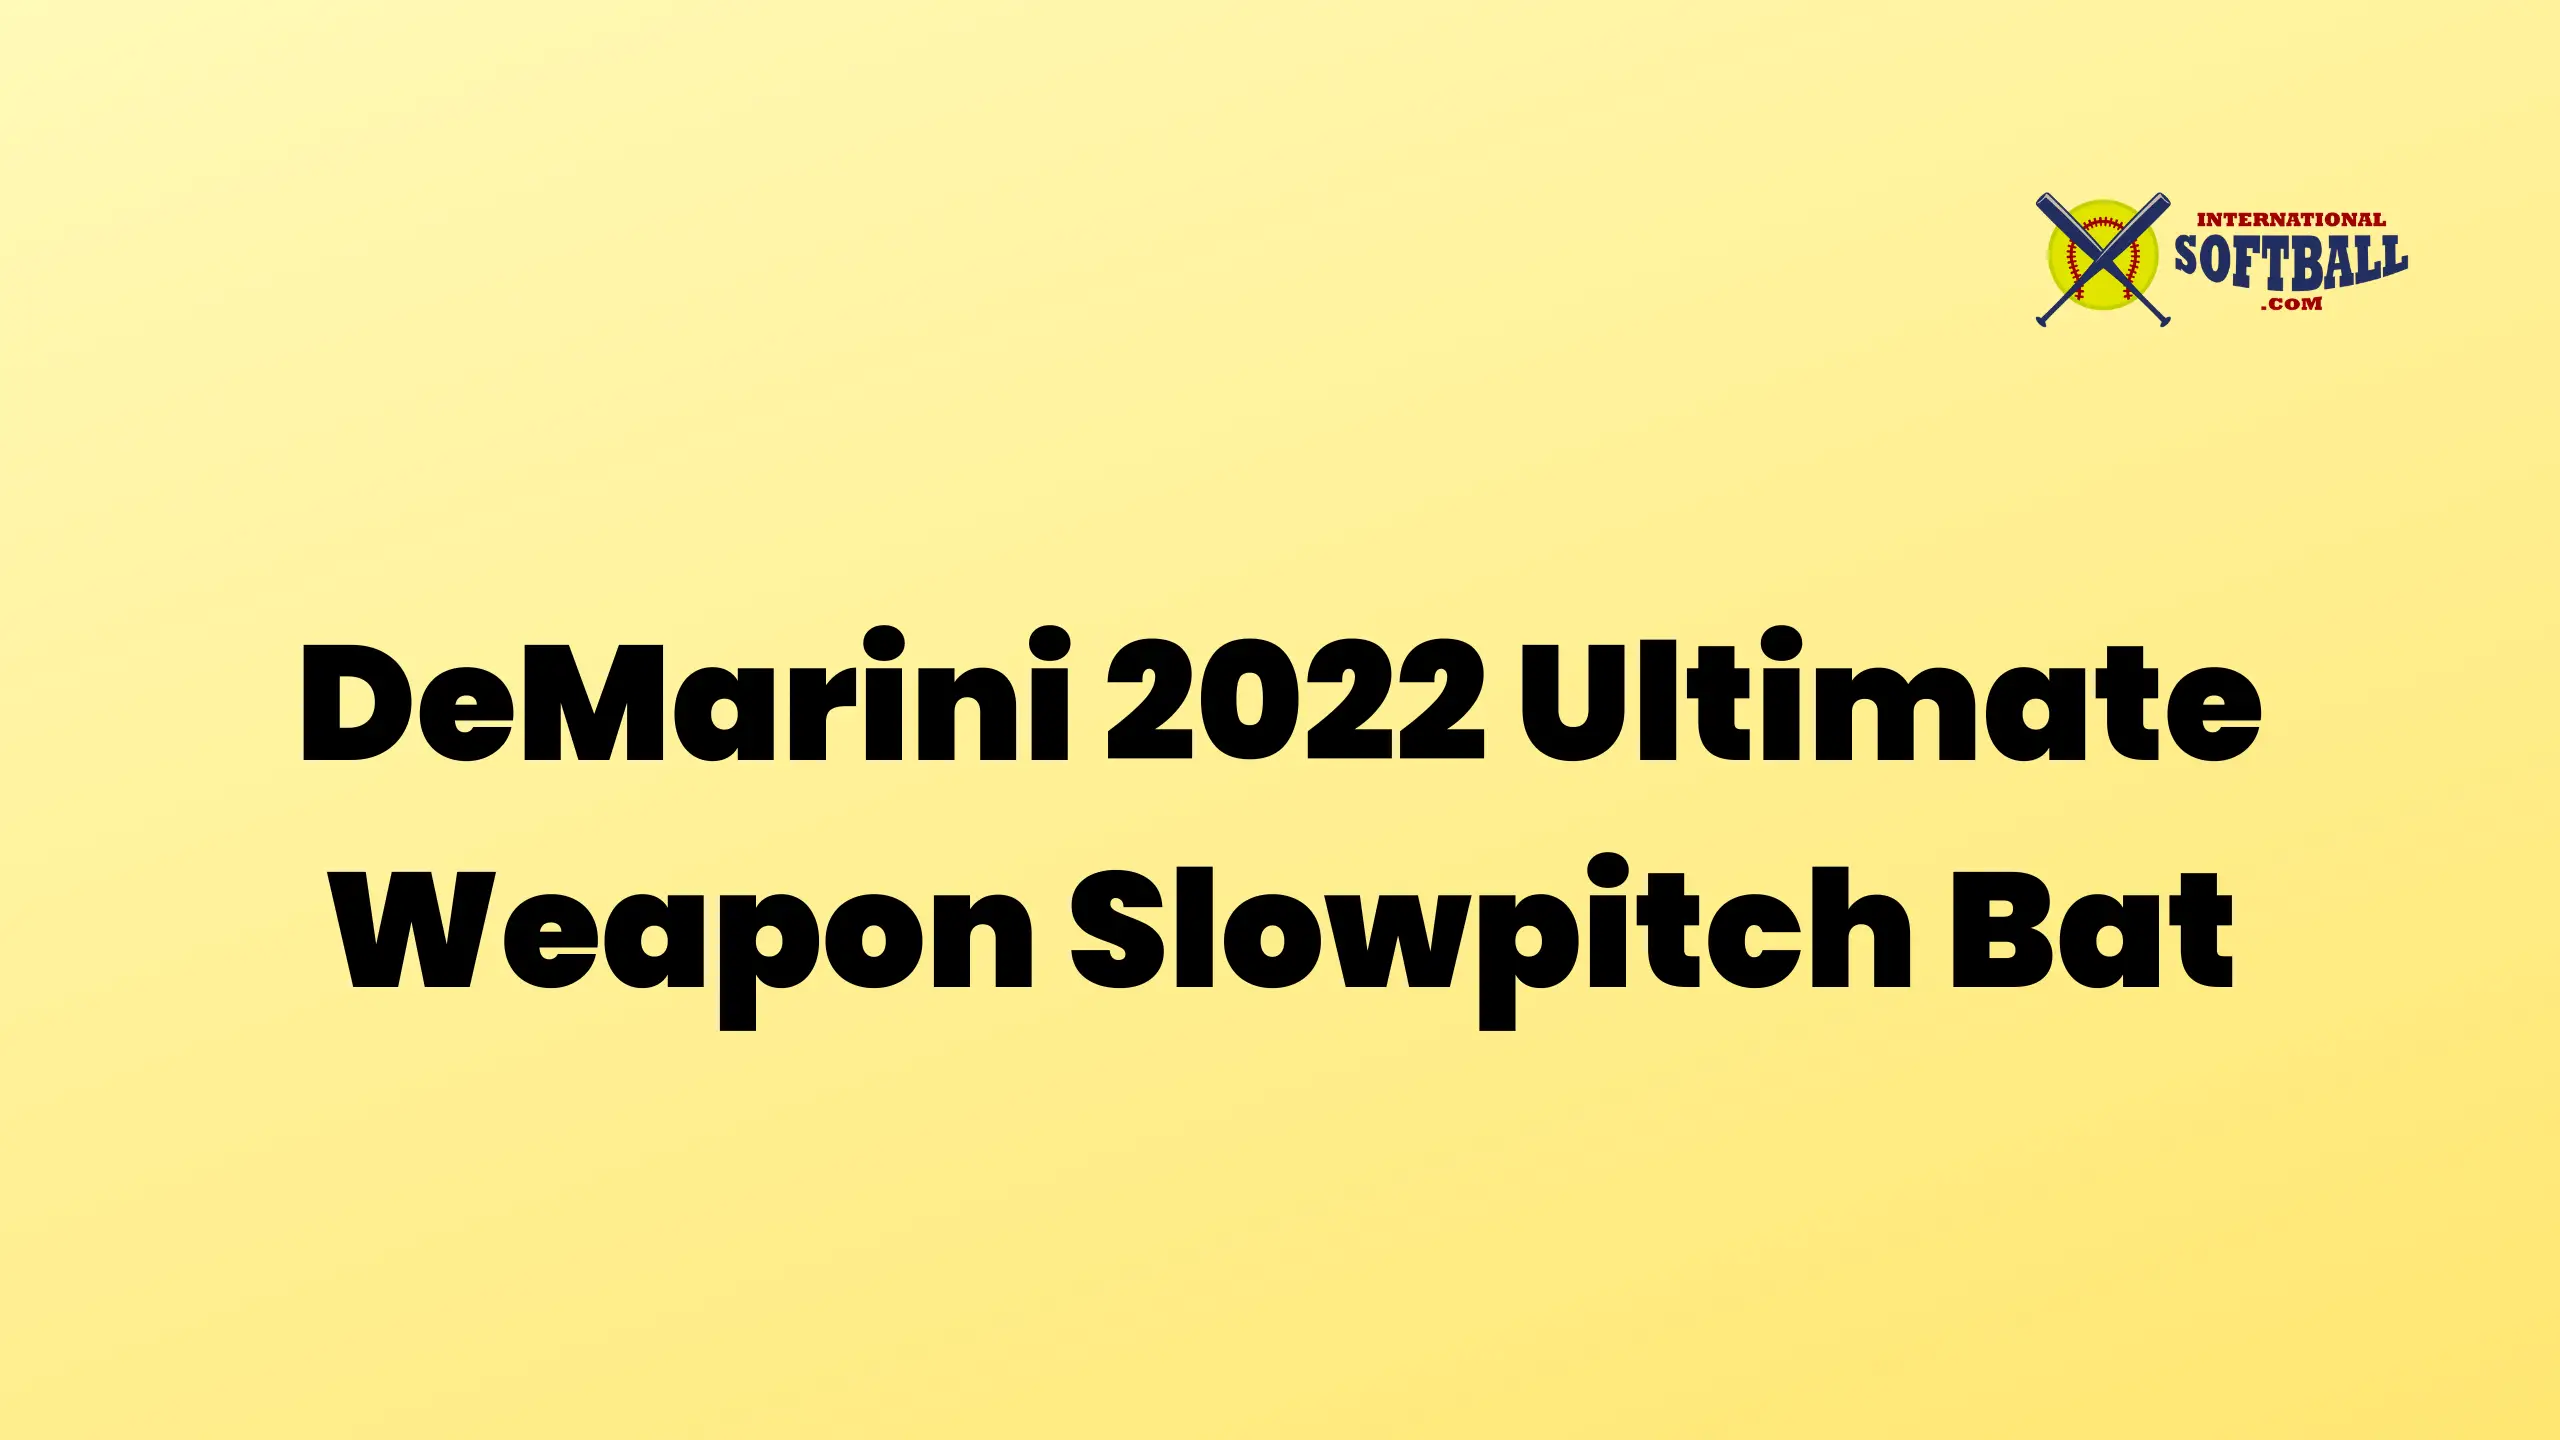 DeMarini 2022 Ultimate Weapon Slowpitch Bat